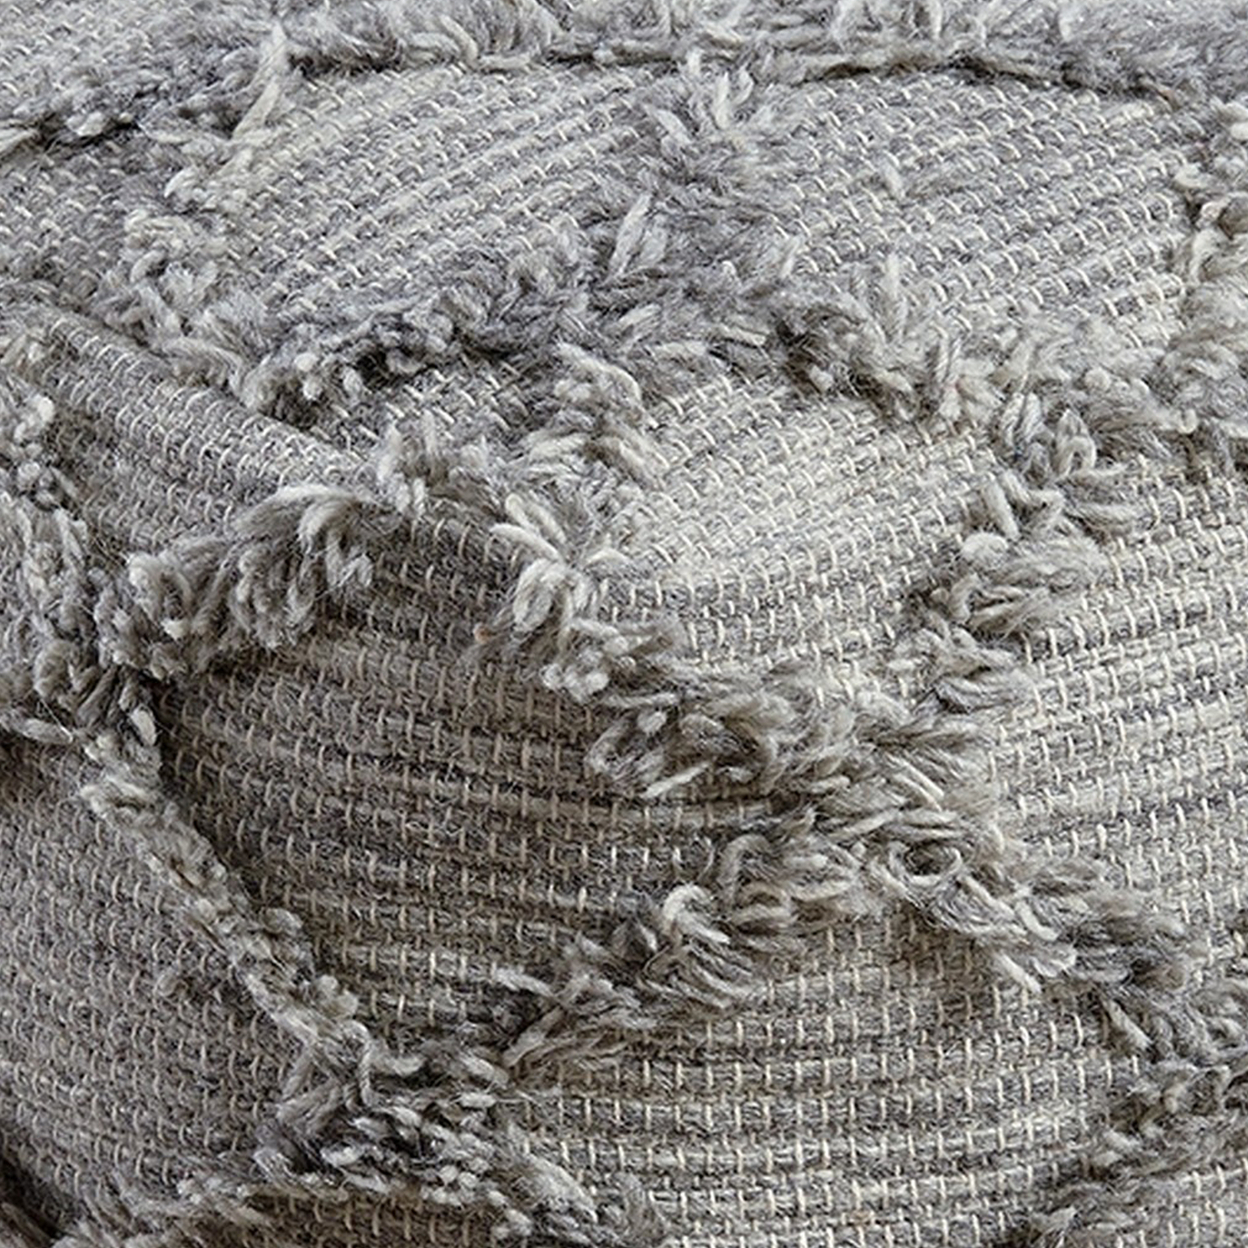 16 Inches Woolen Pouf With Hand Woven Diamond Fringe, Gray- Saltoro Sherpi